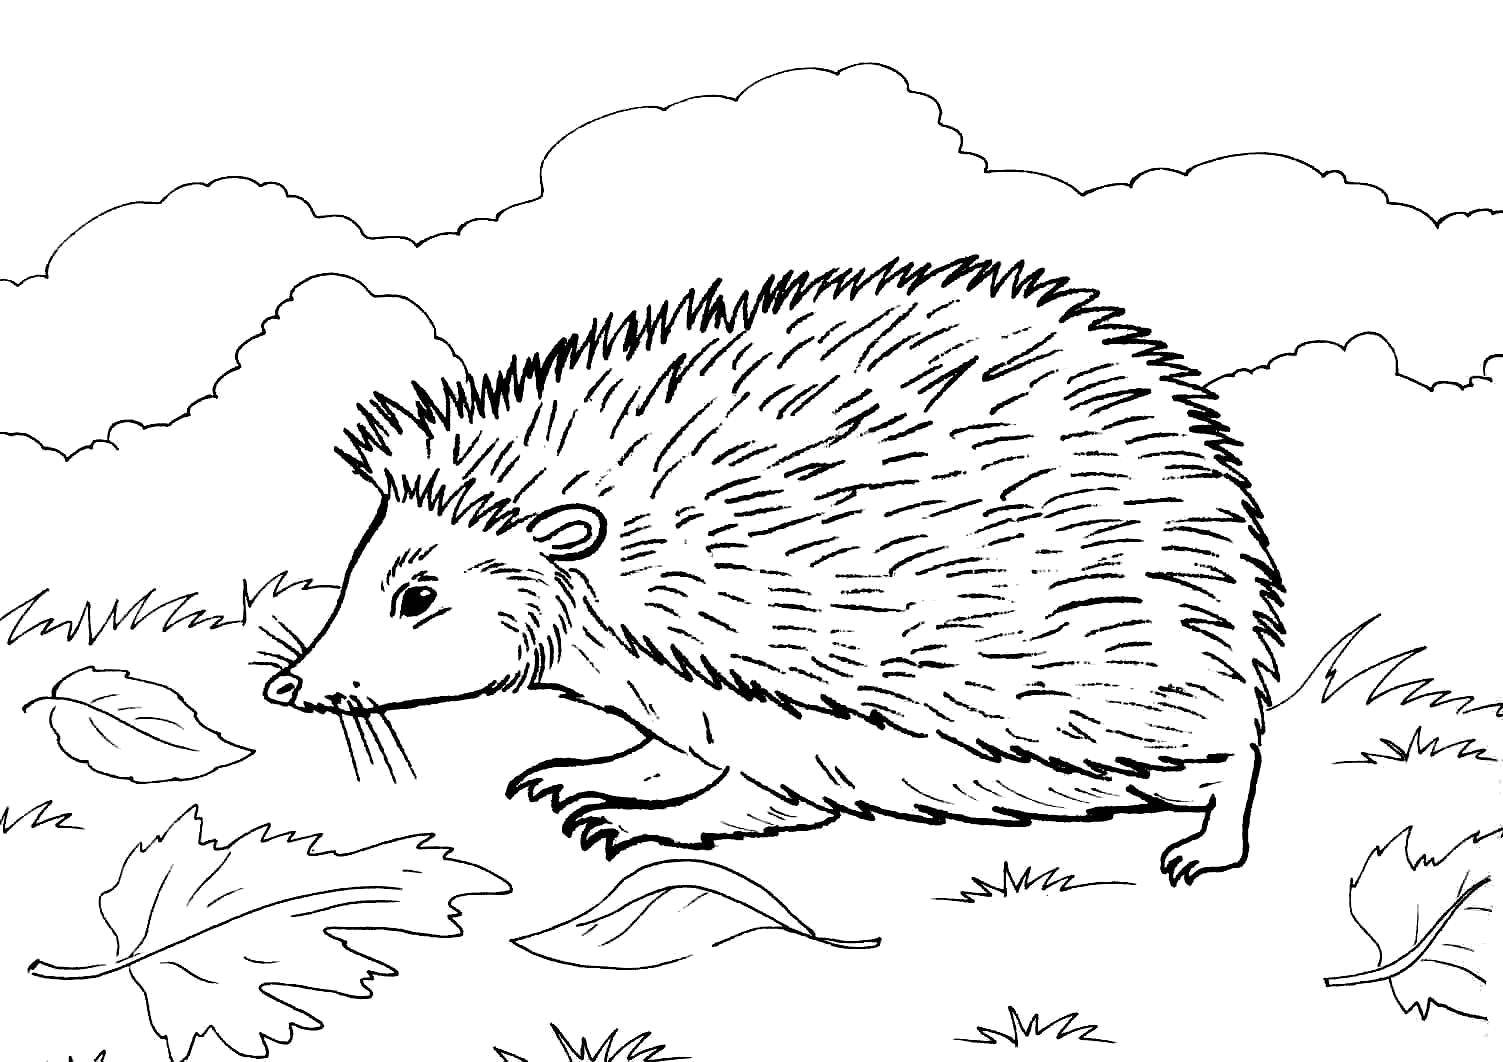 Coloring Hedgehog. Category wild animals. Tags:  animals, hedgehog.